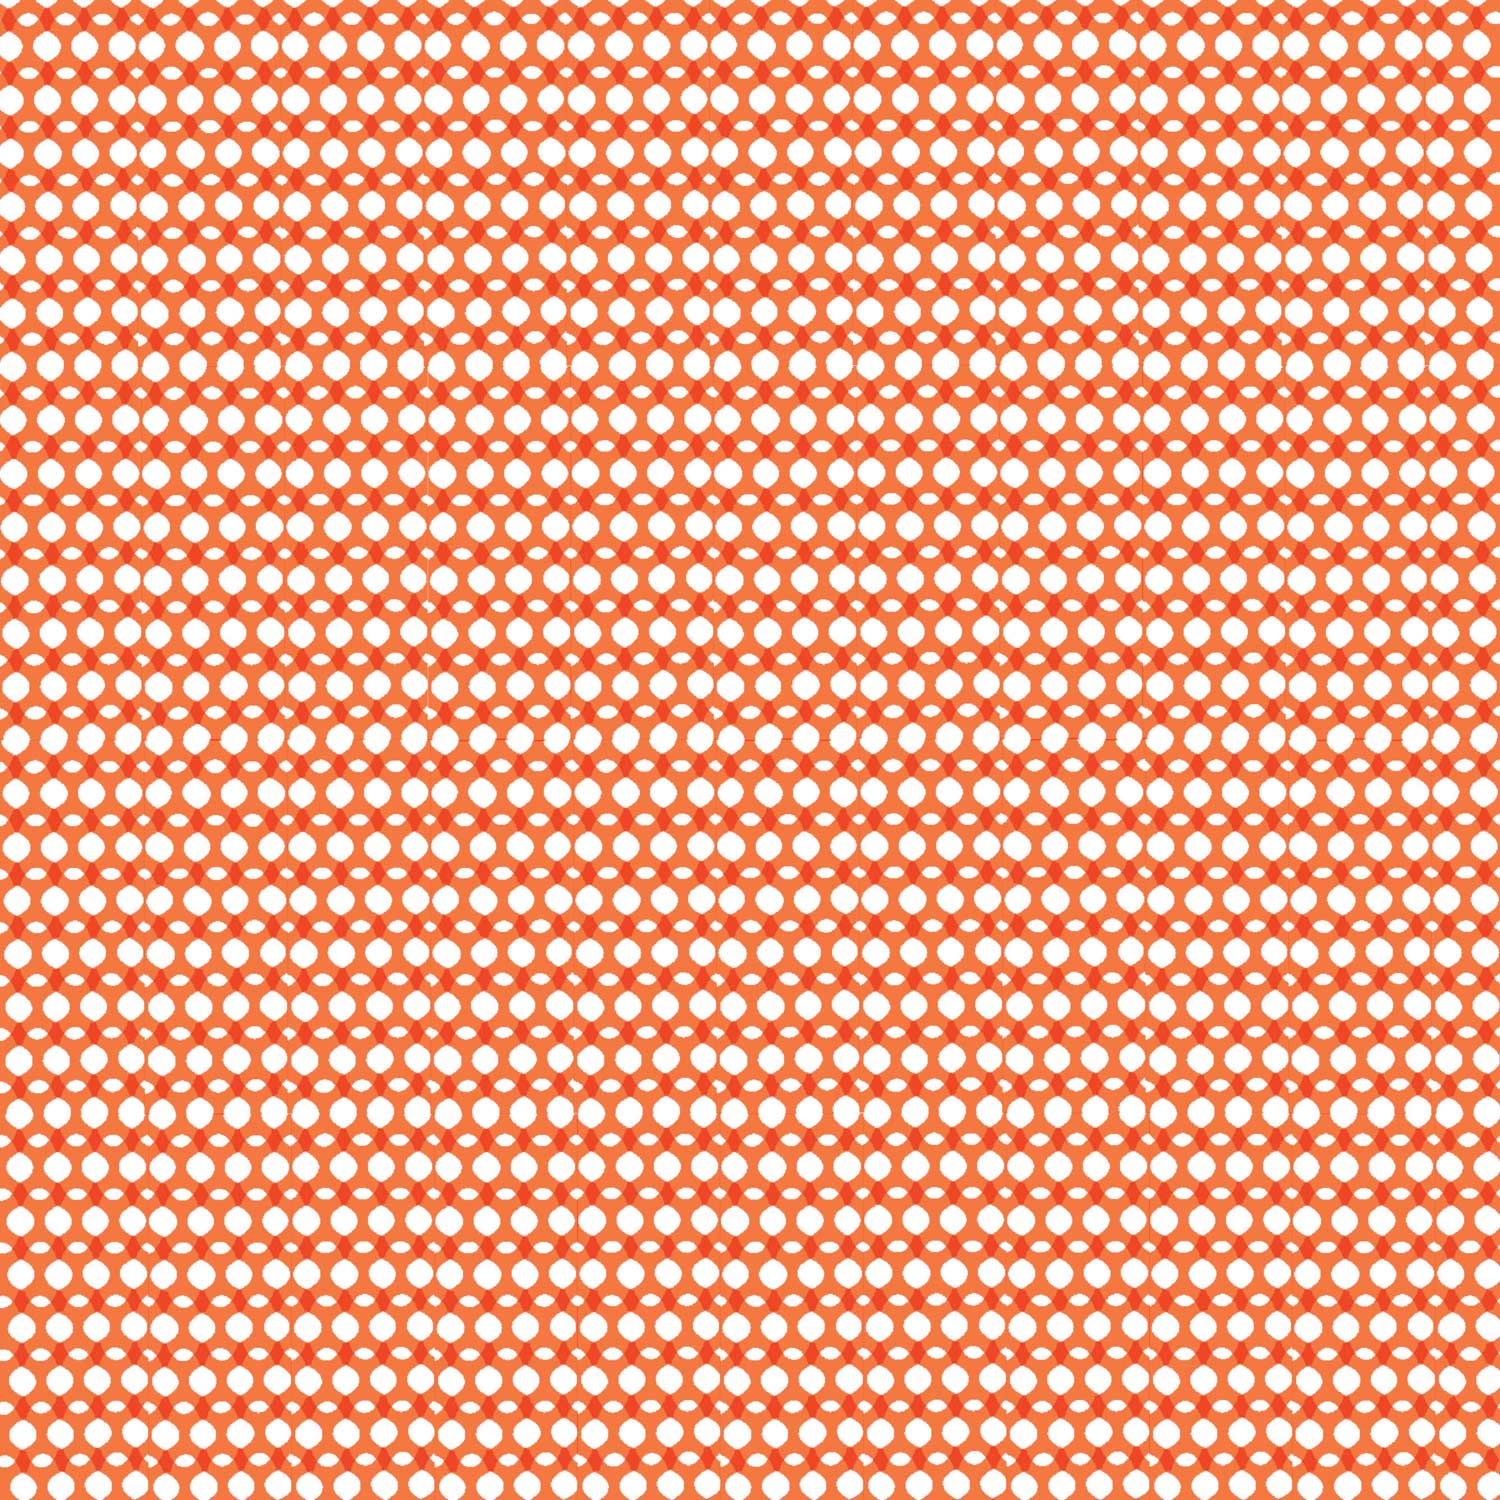 PENELOPE-clementine.jpg